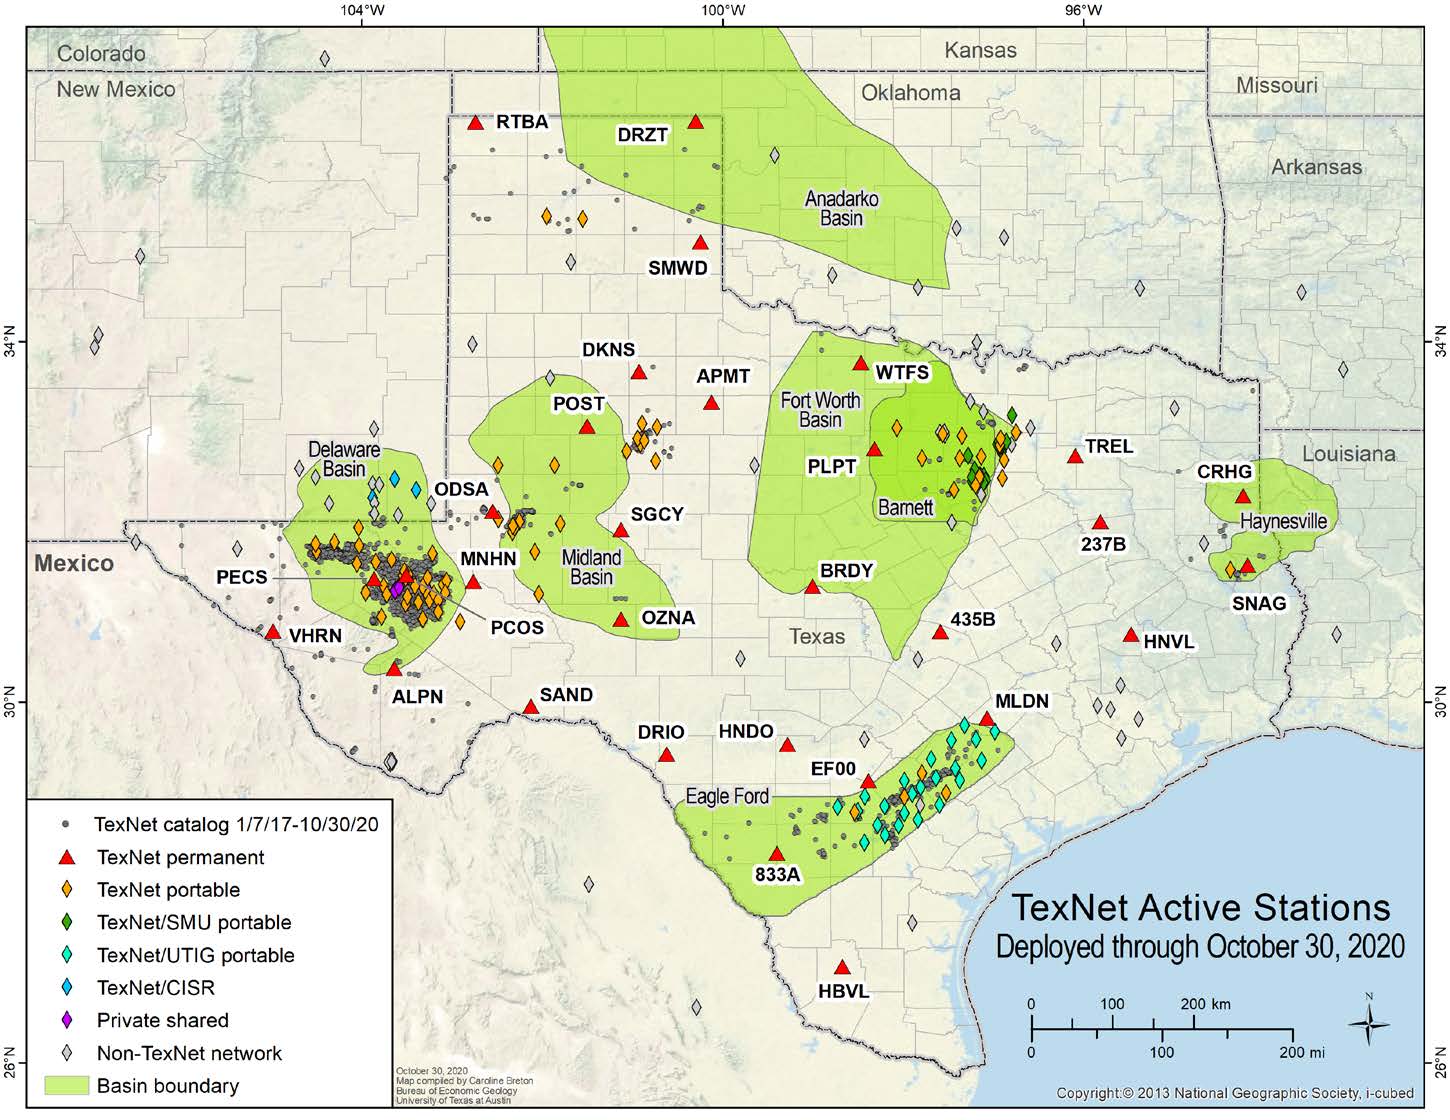 Texas Earthquake System Strengthens National Network - UT News